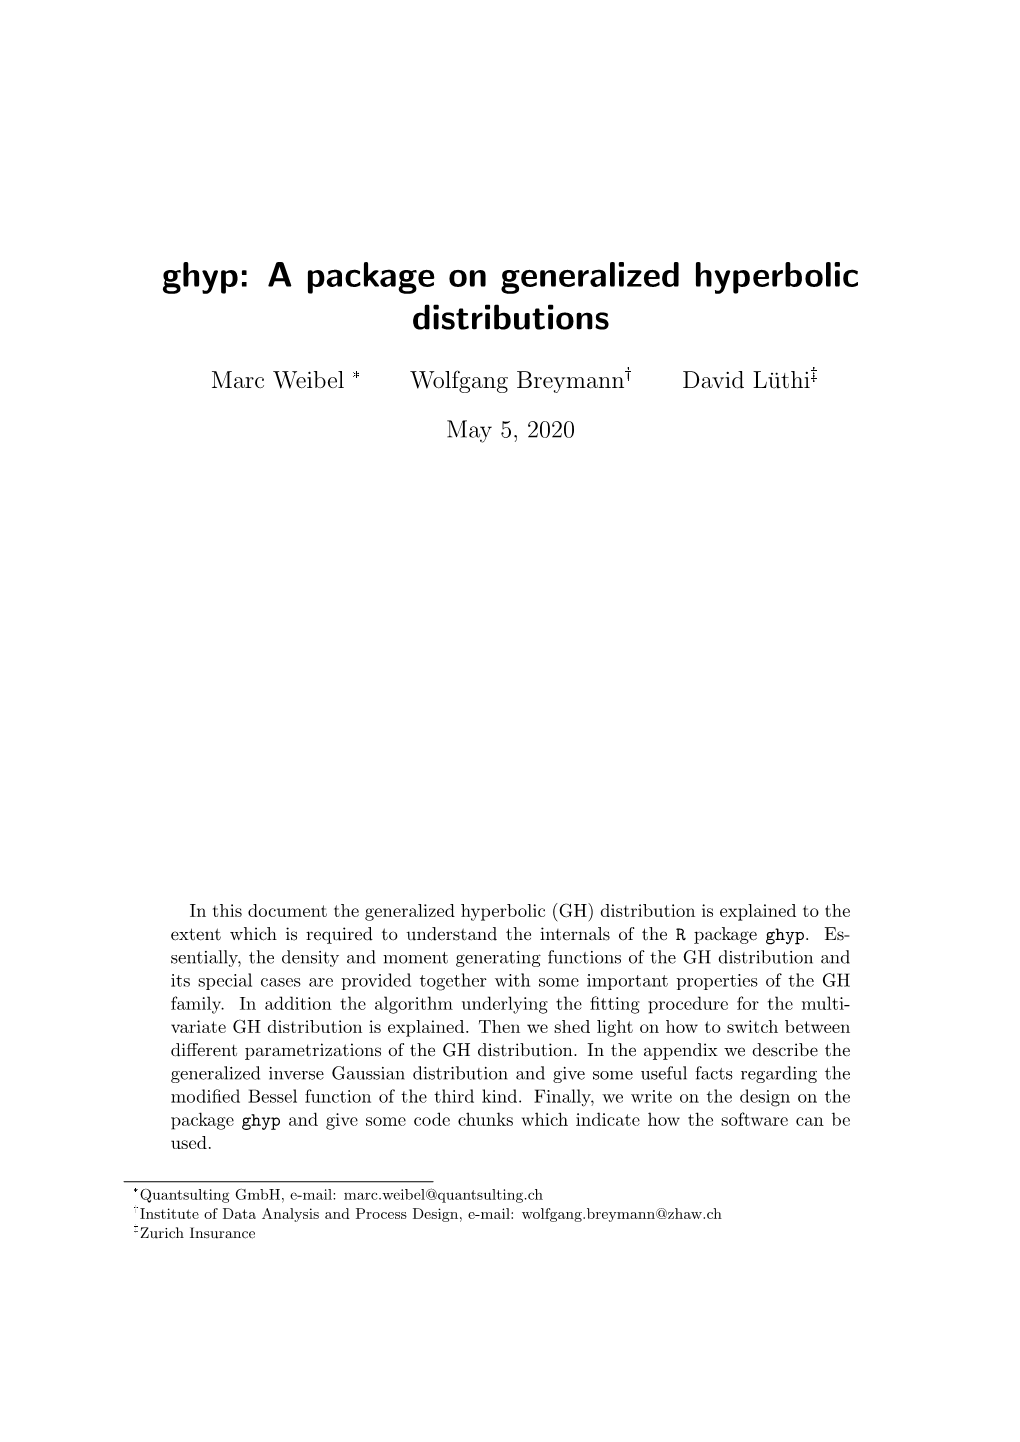 Generalized Hyperbolic Distributions